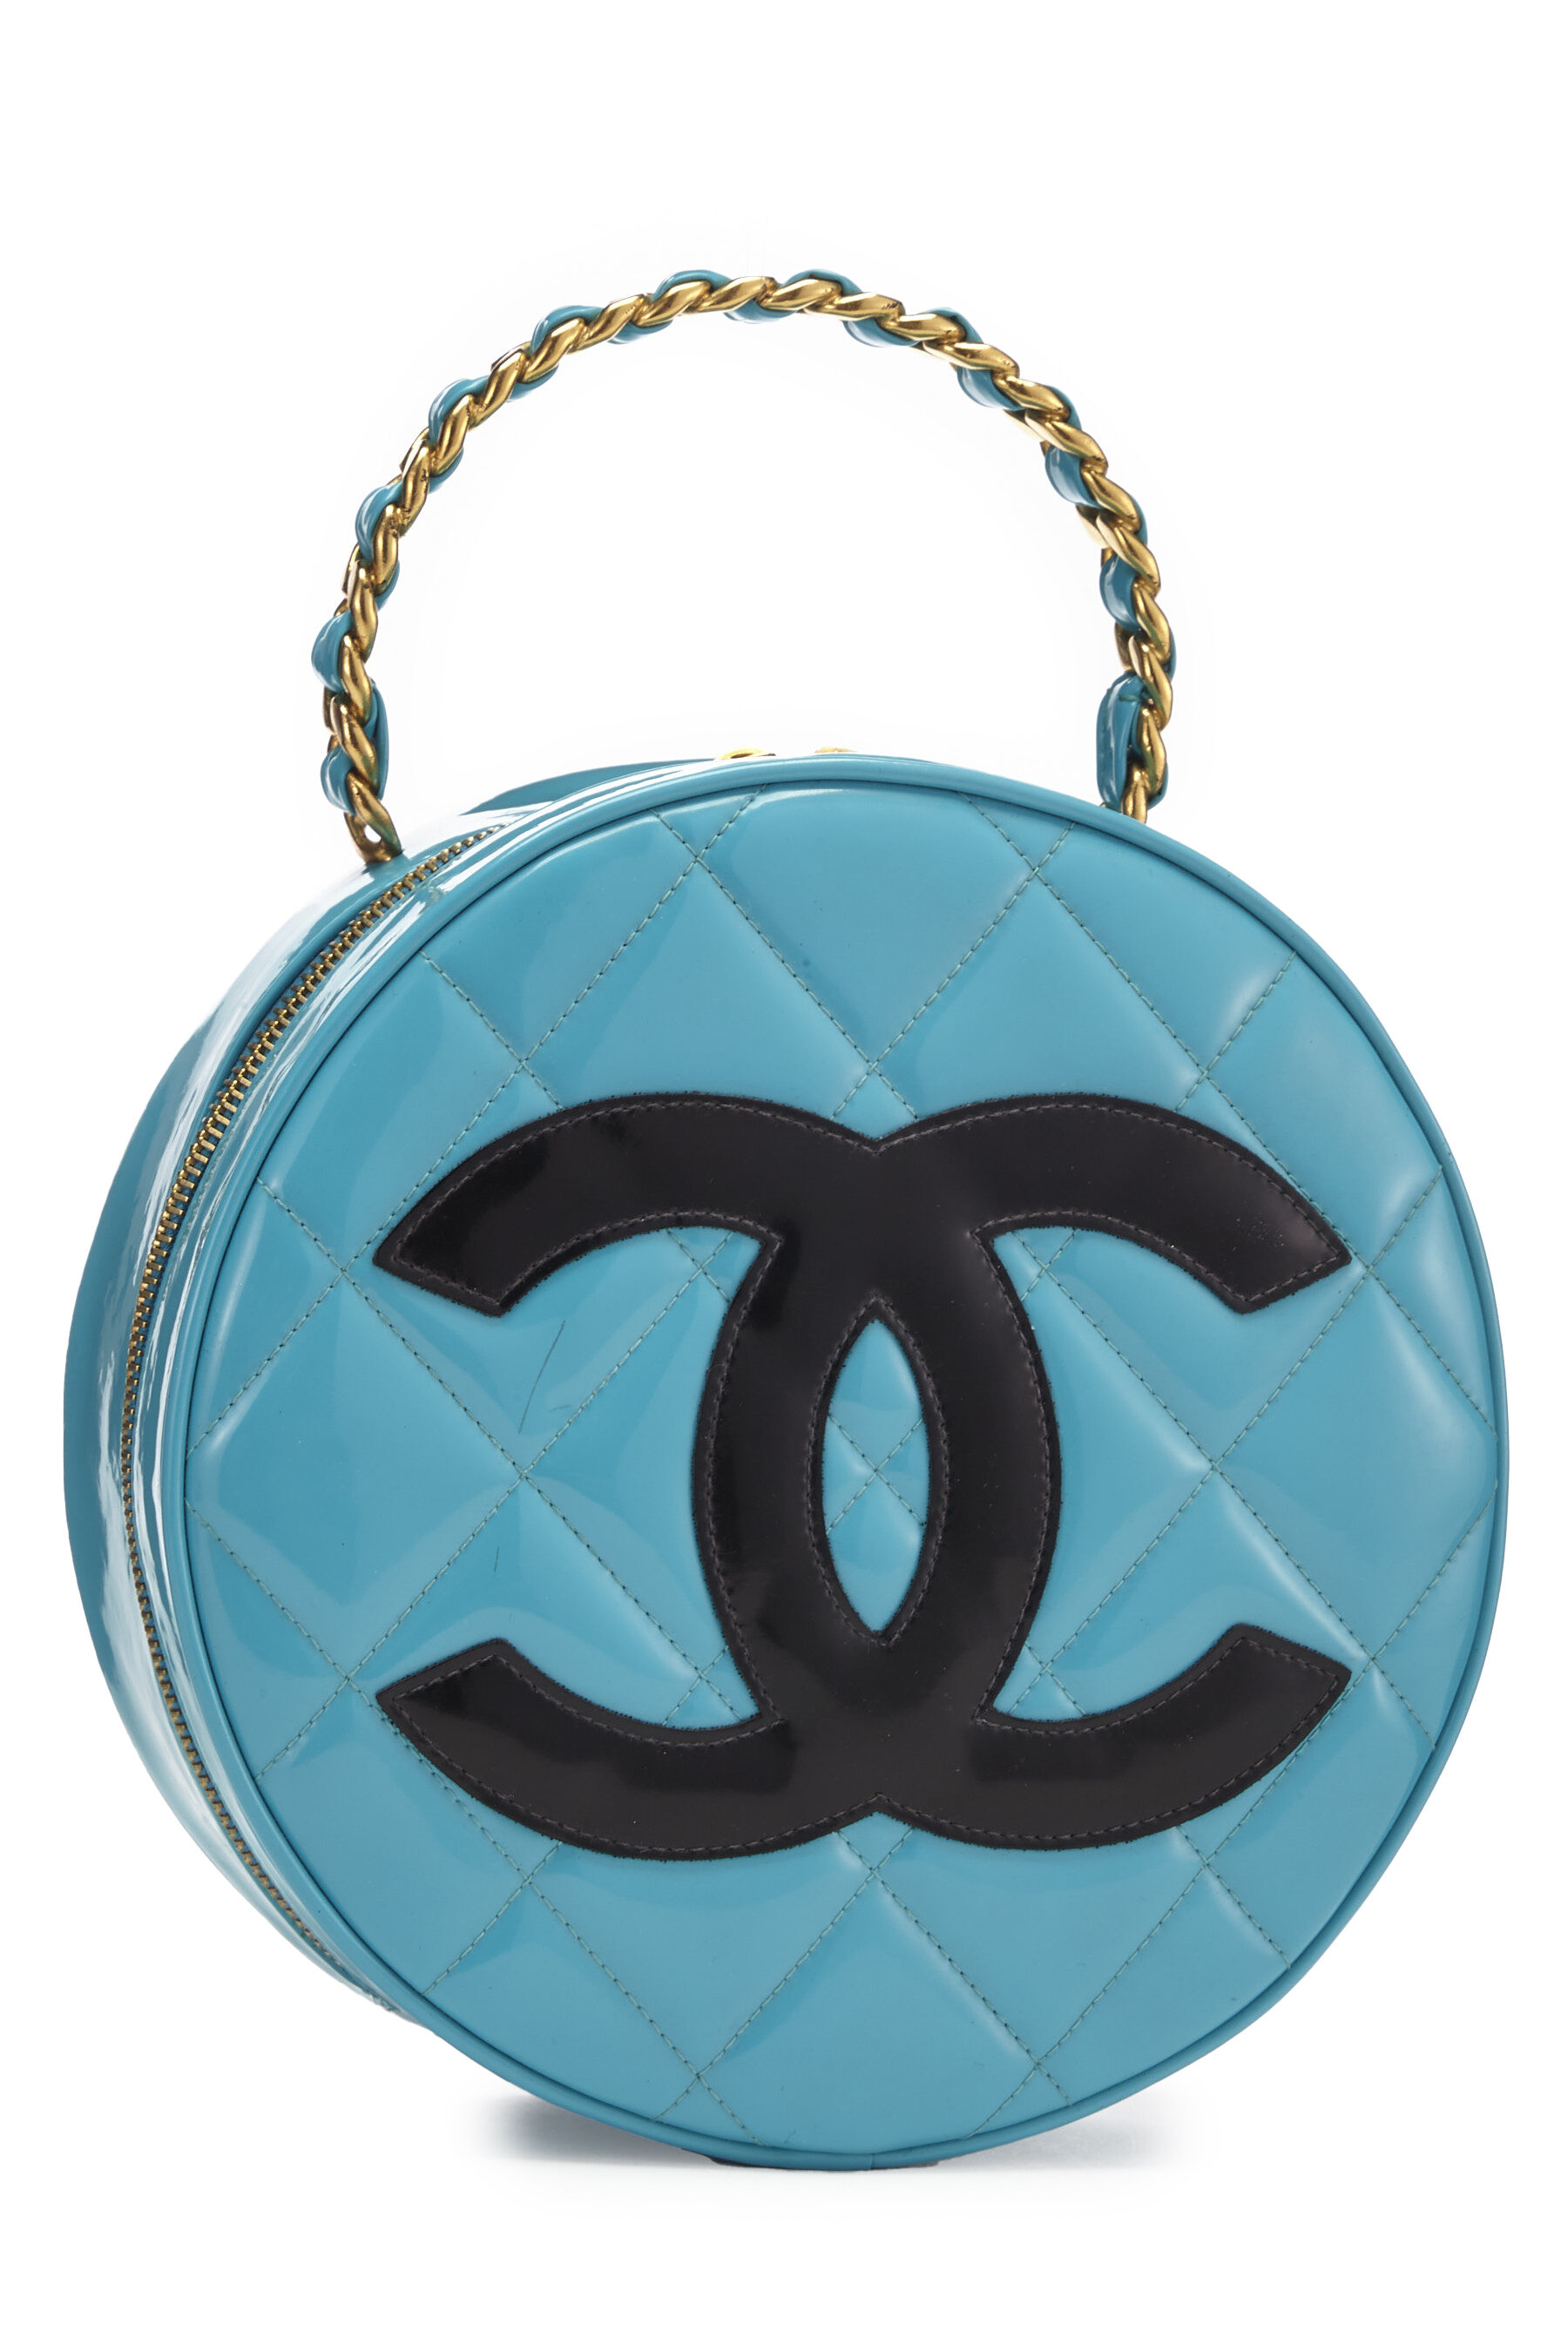 Chanel Black Patent Leather Round 'CC' Handbag Q6BJHX27KB004